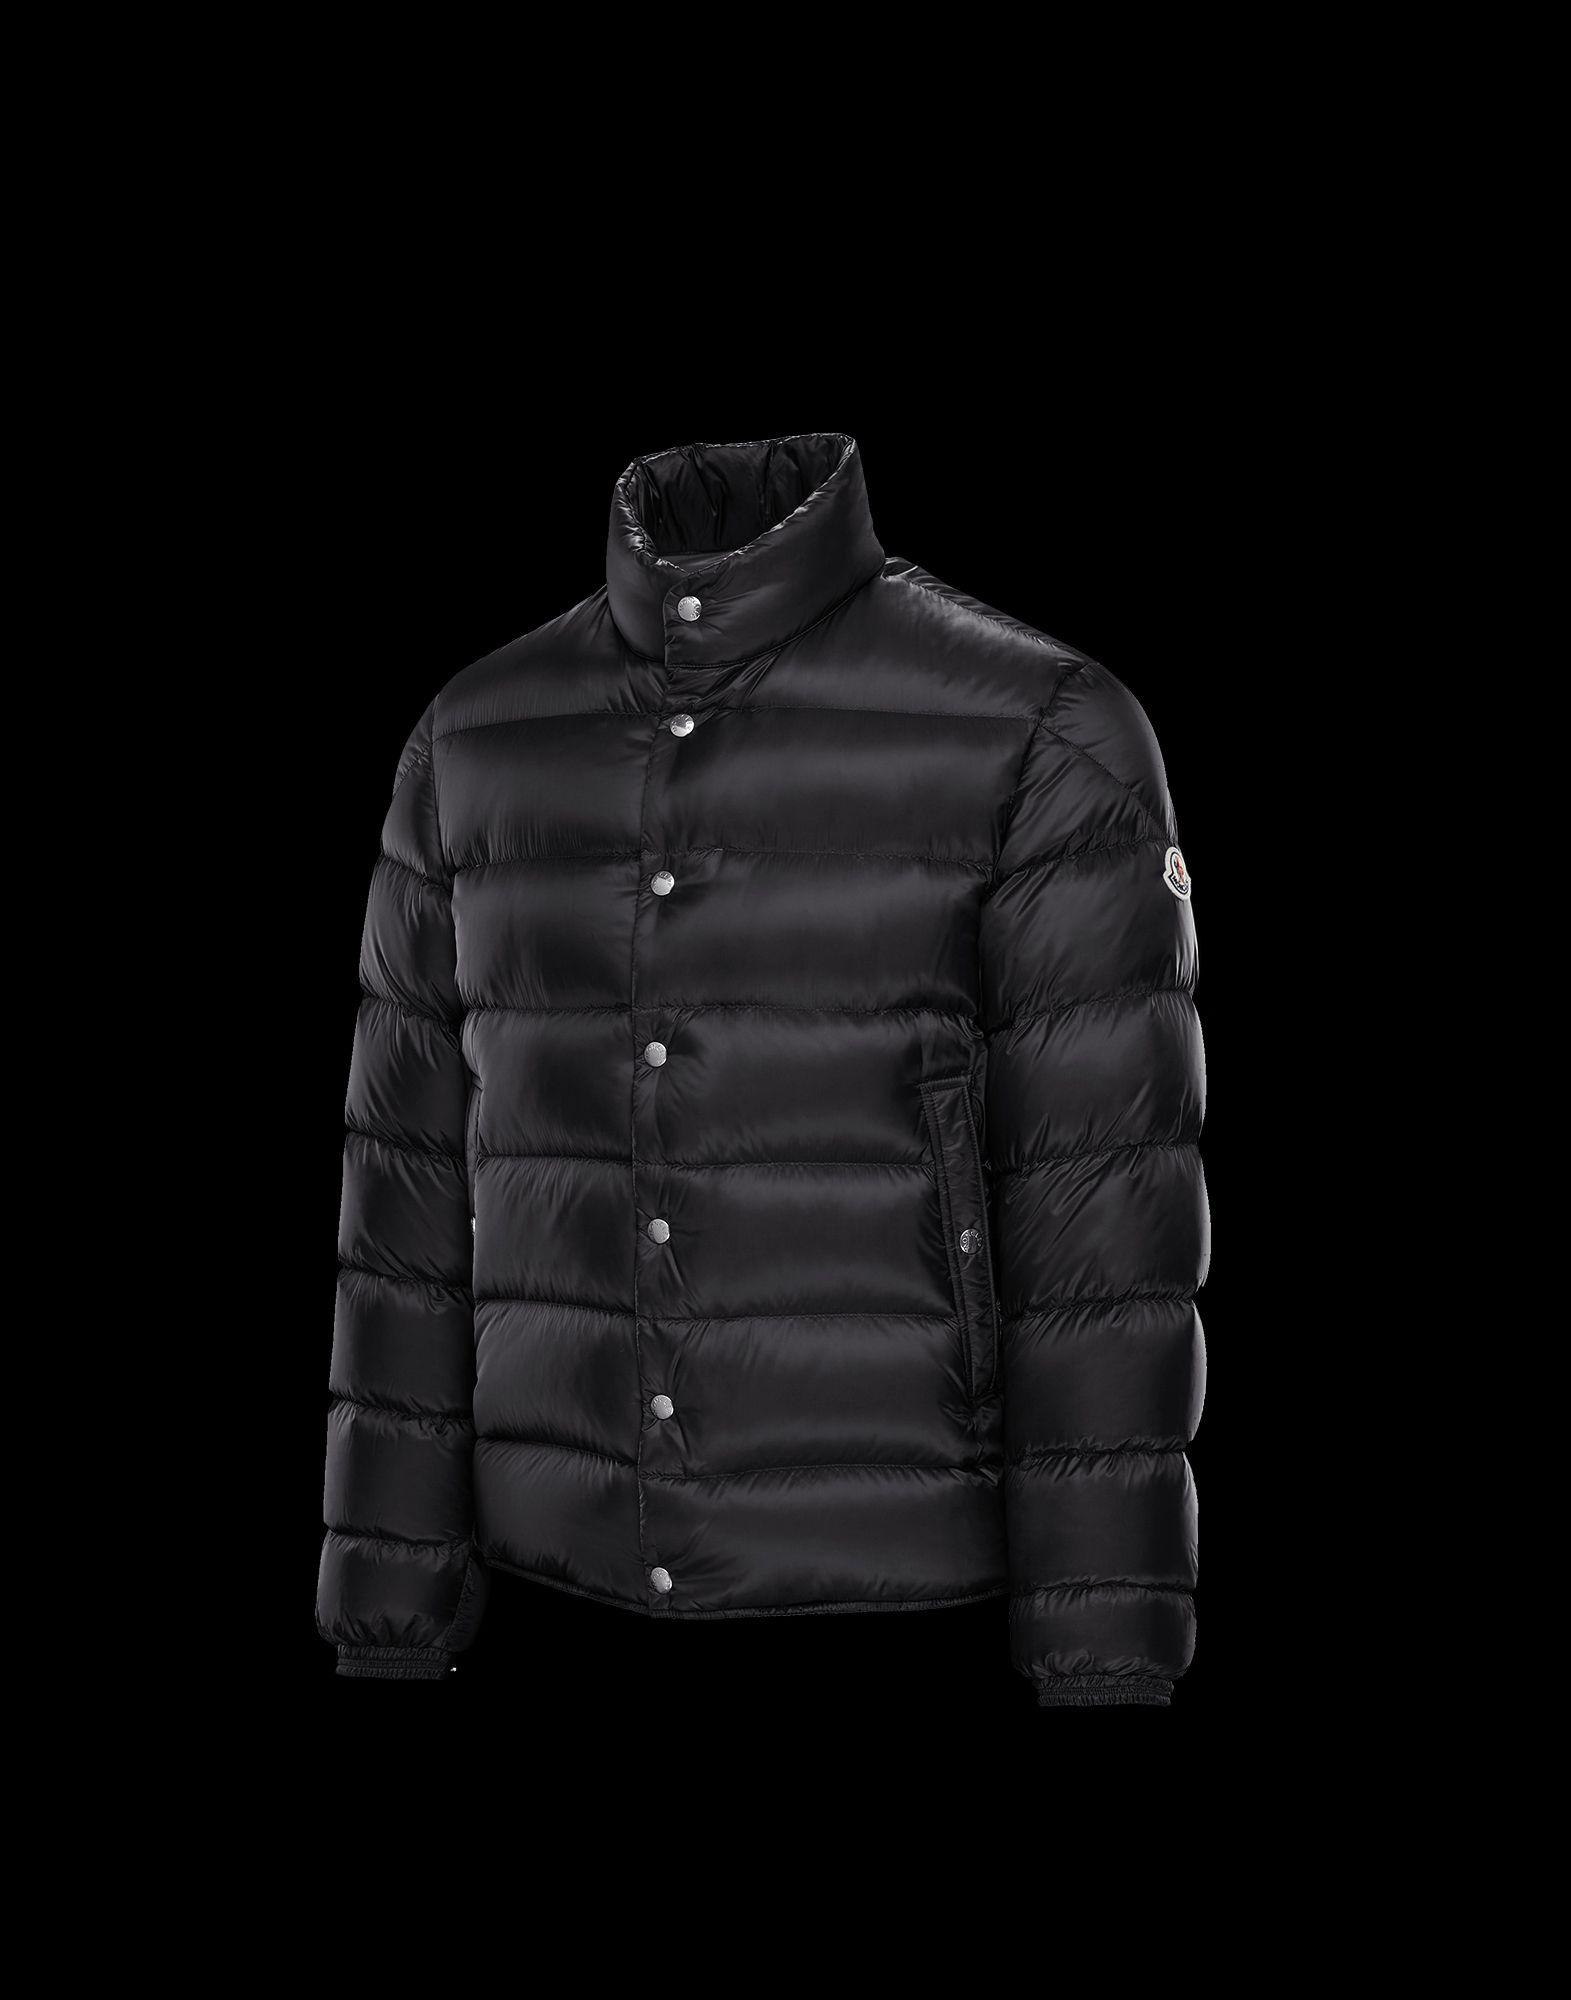 Moncler Piriac Jacket in Black for Men - Lyst